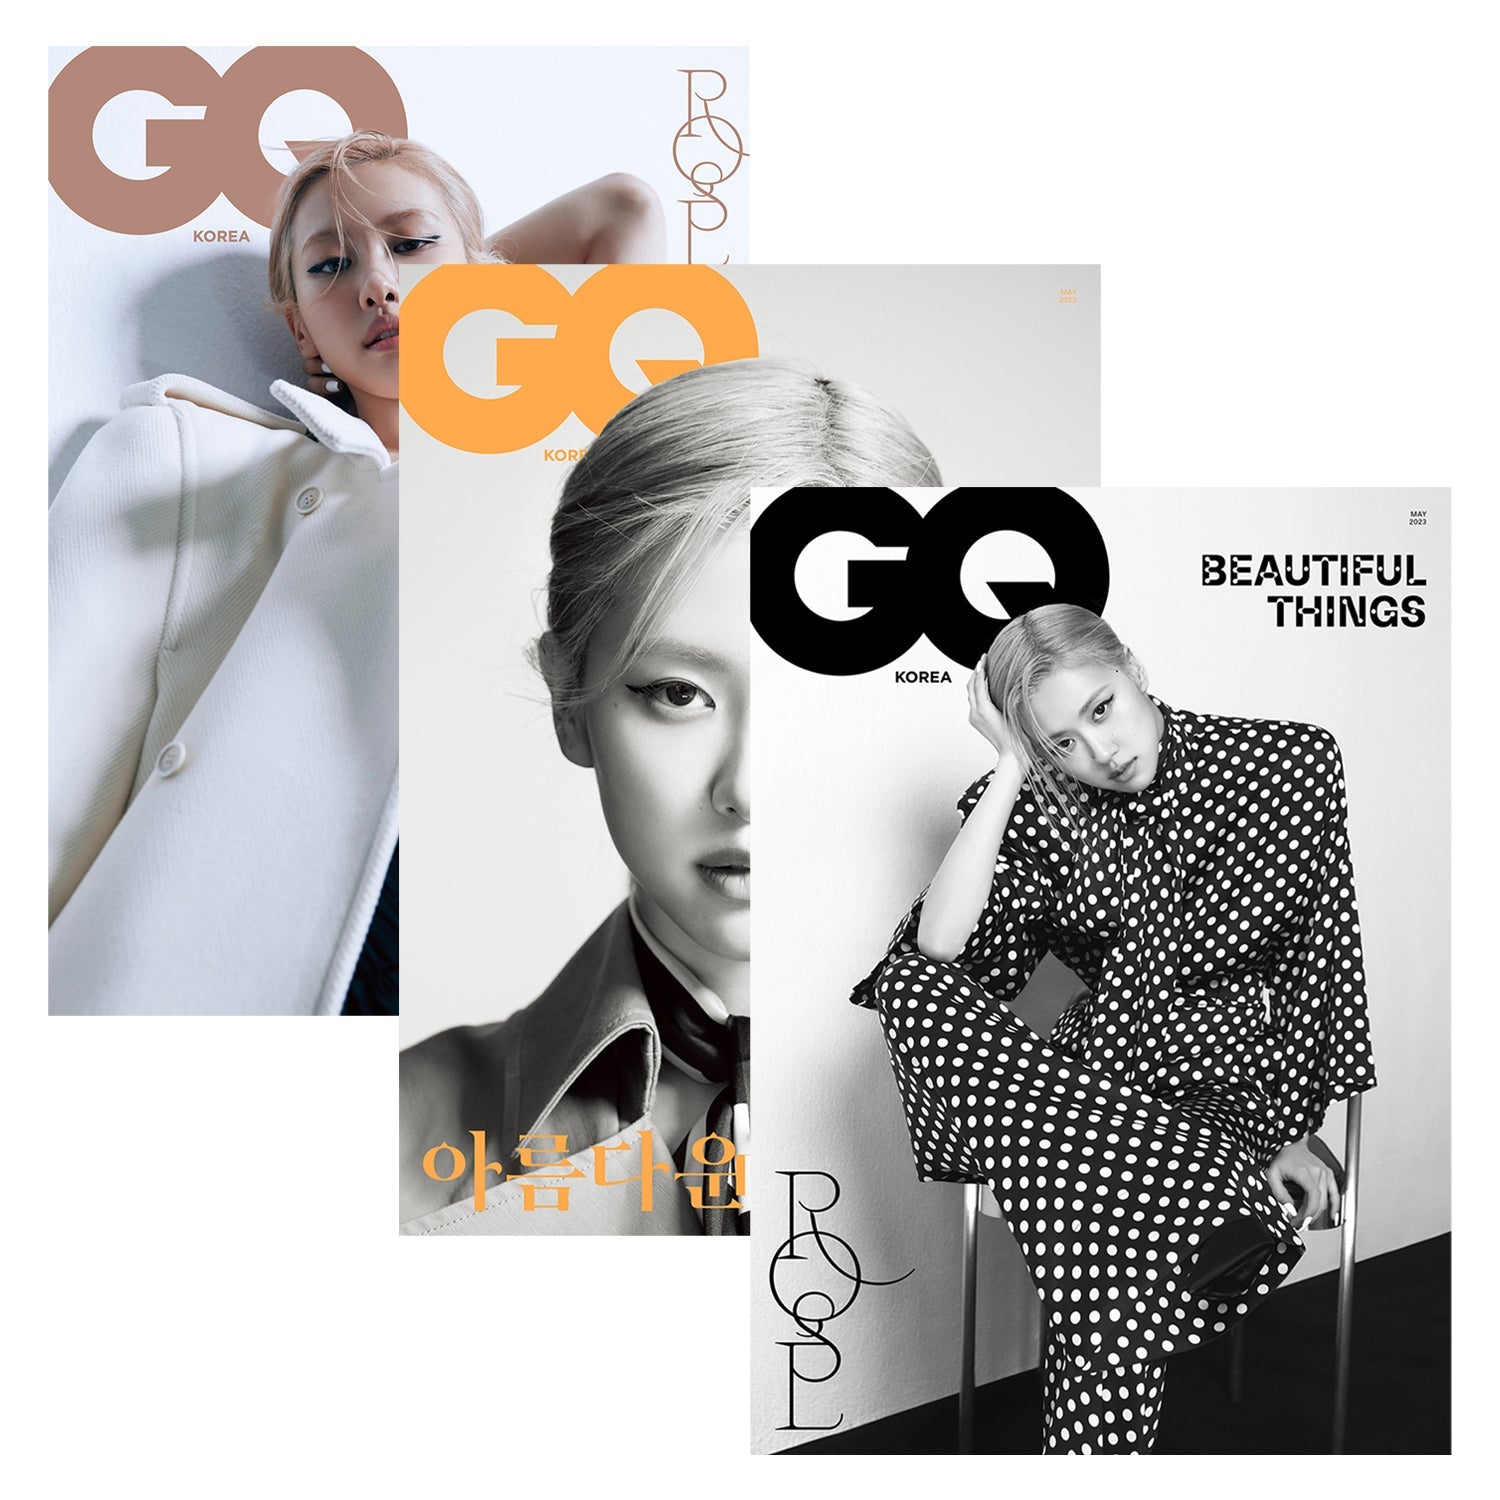 GQ Korea x Vogue Korea release the breathtaking covers of BTS